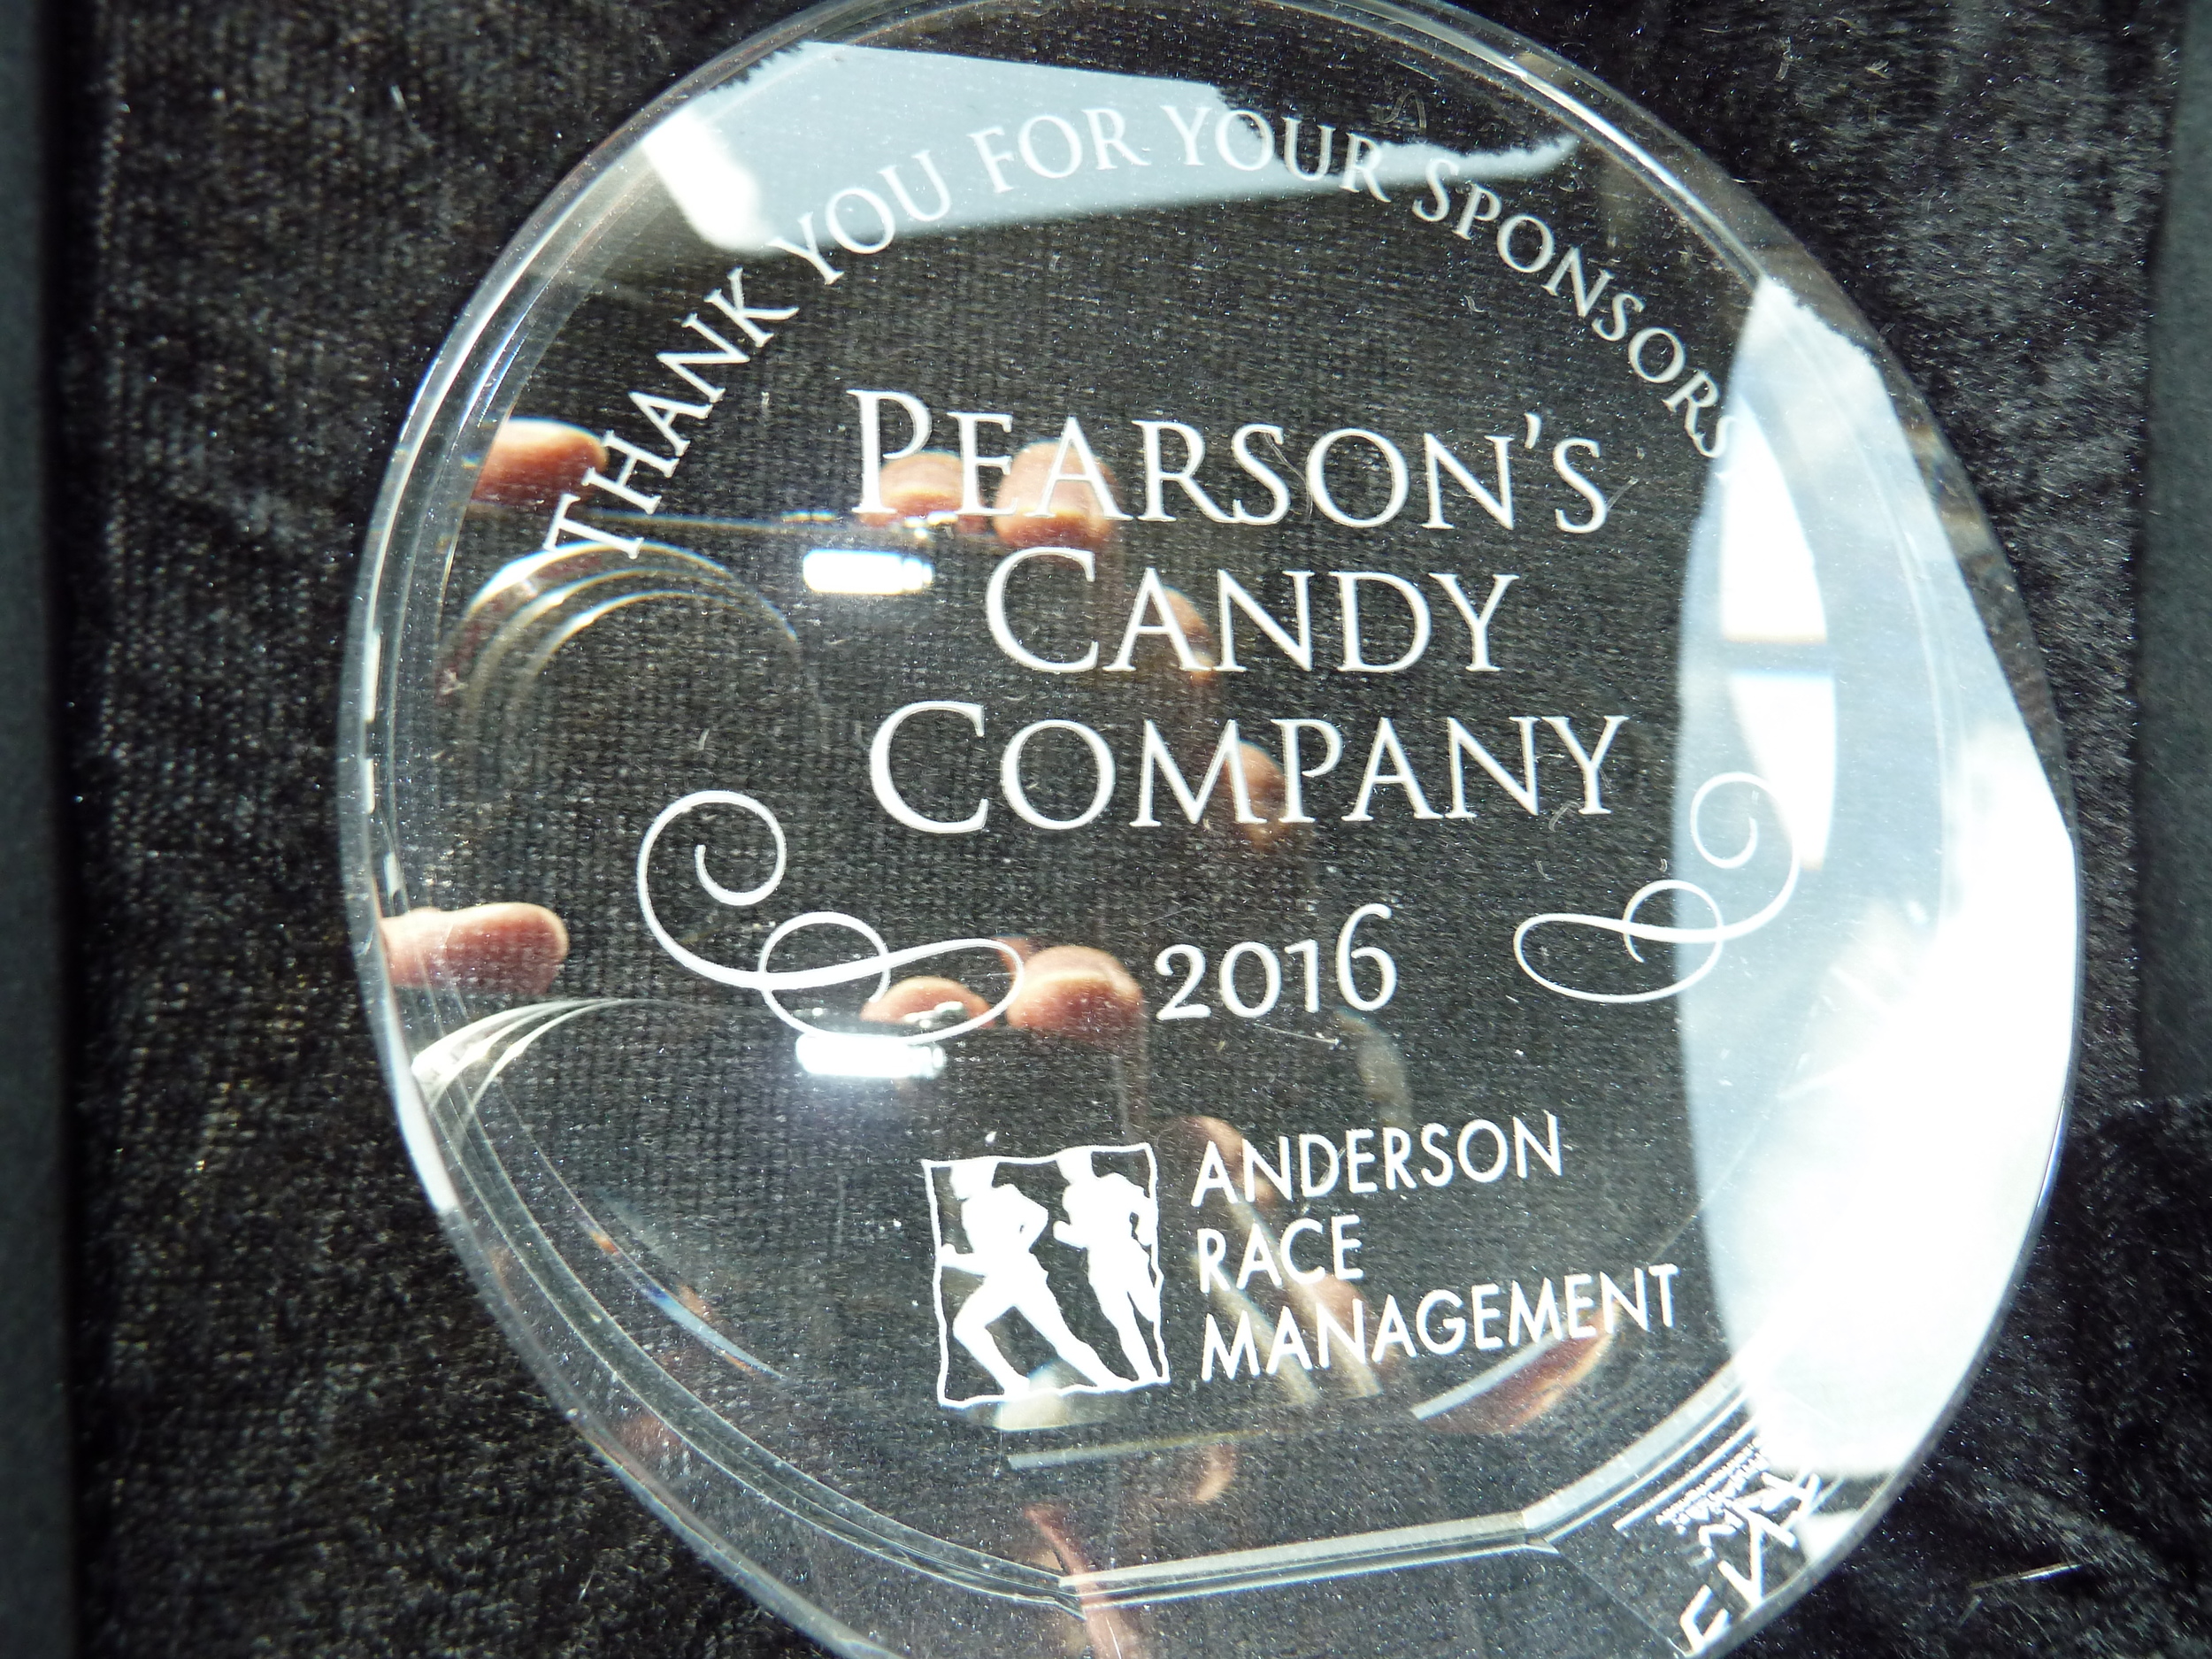 Pearson's Candy.JPG